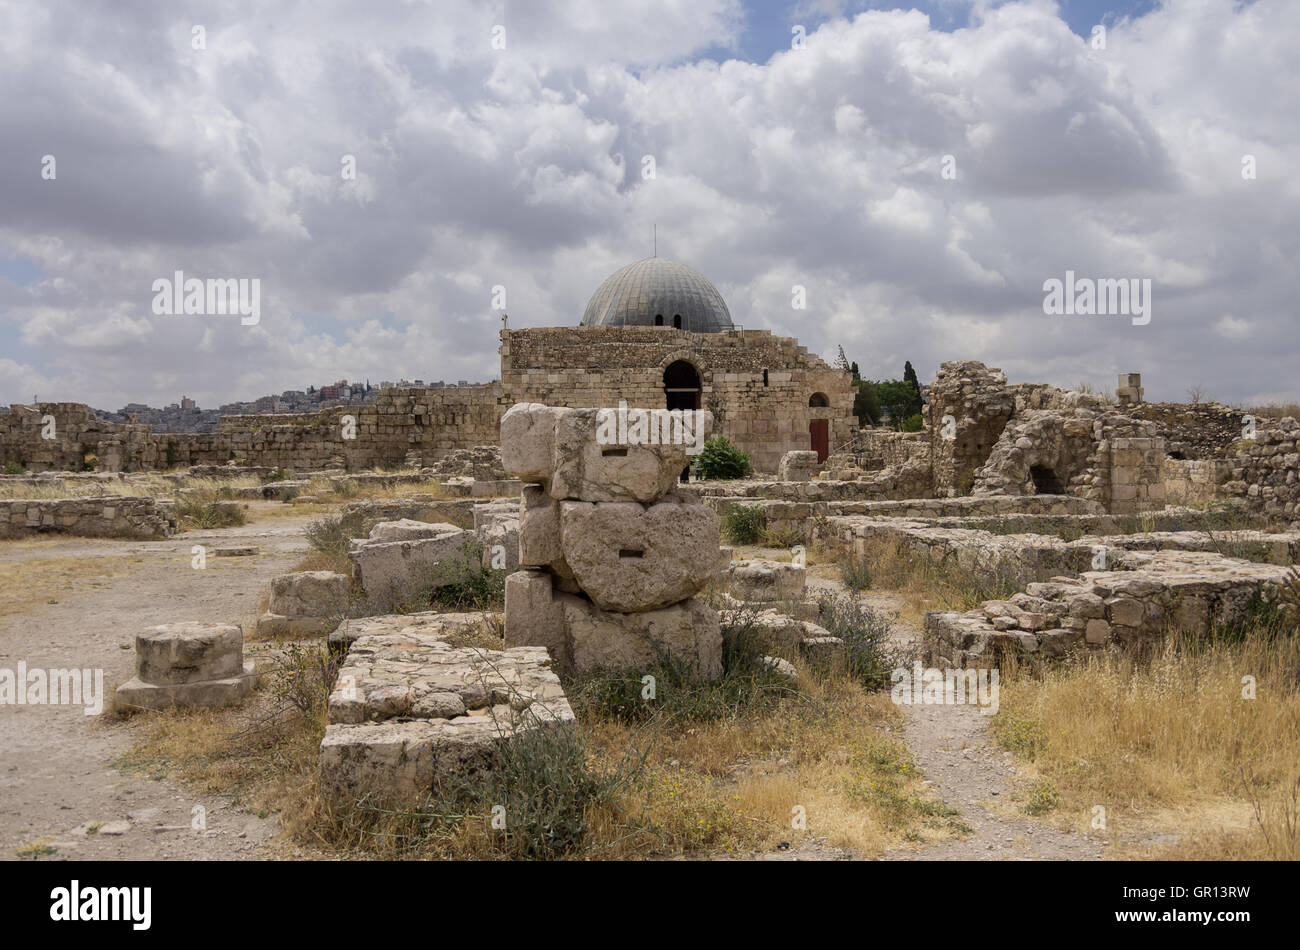 View of old Umayyad Palace, Jabal al-Qal'a, Citadel hill in Amman. Jordan Stock Photo